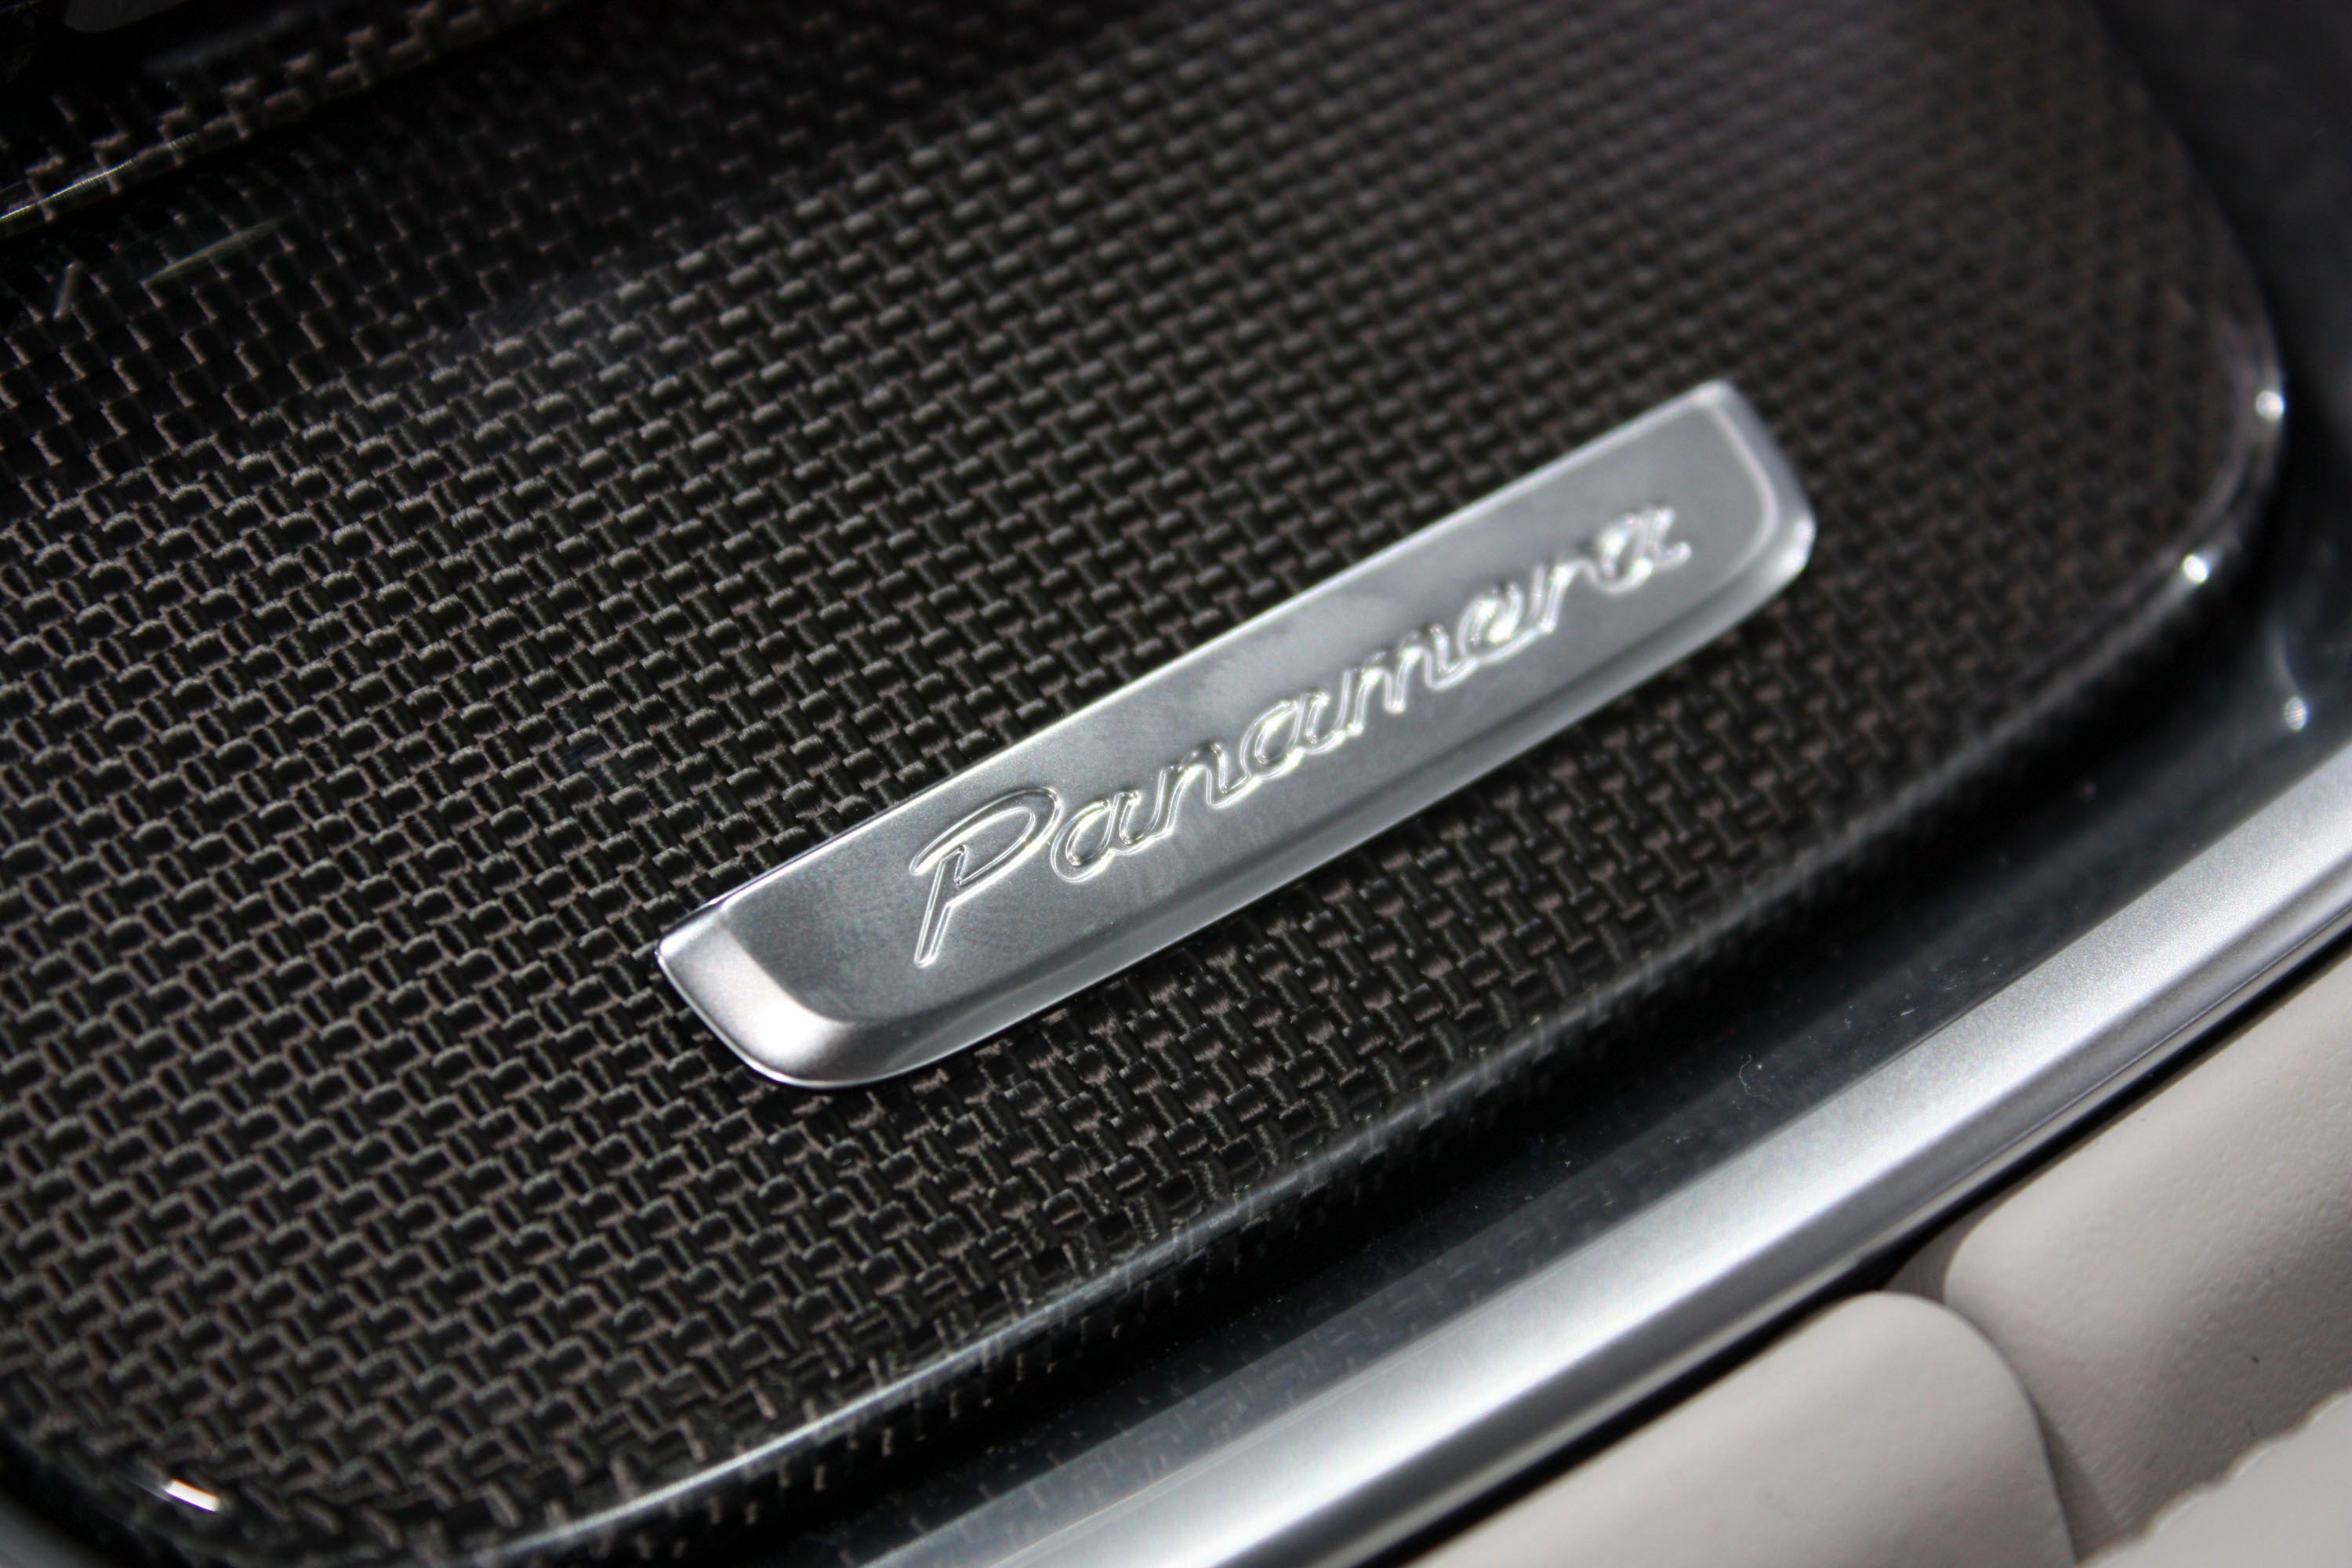 2018 Porsche Panamera Turbo S E-Hybrid Sport Turismo